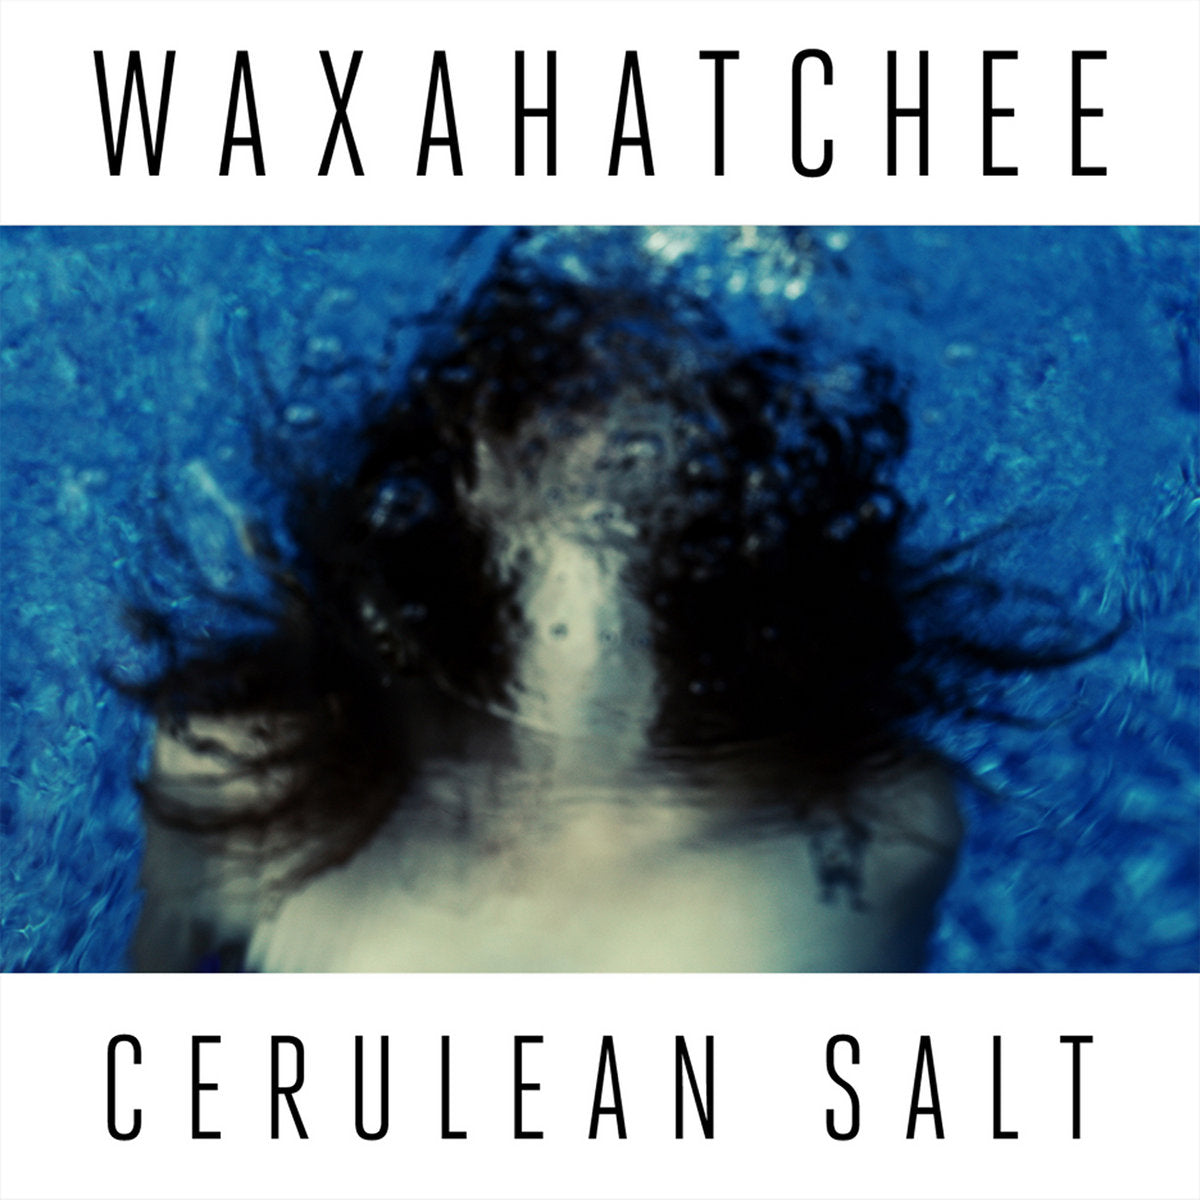 Waxahatchee "Cerulean Salt" [Cerulean Blue Vinyl]